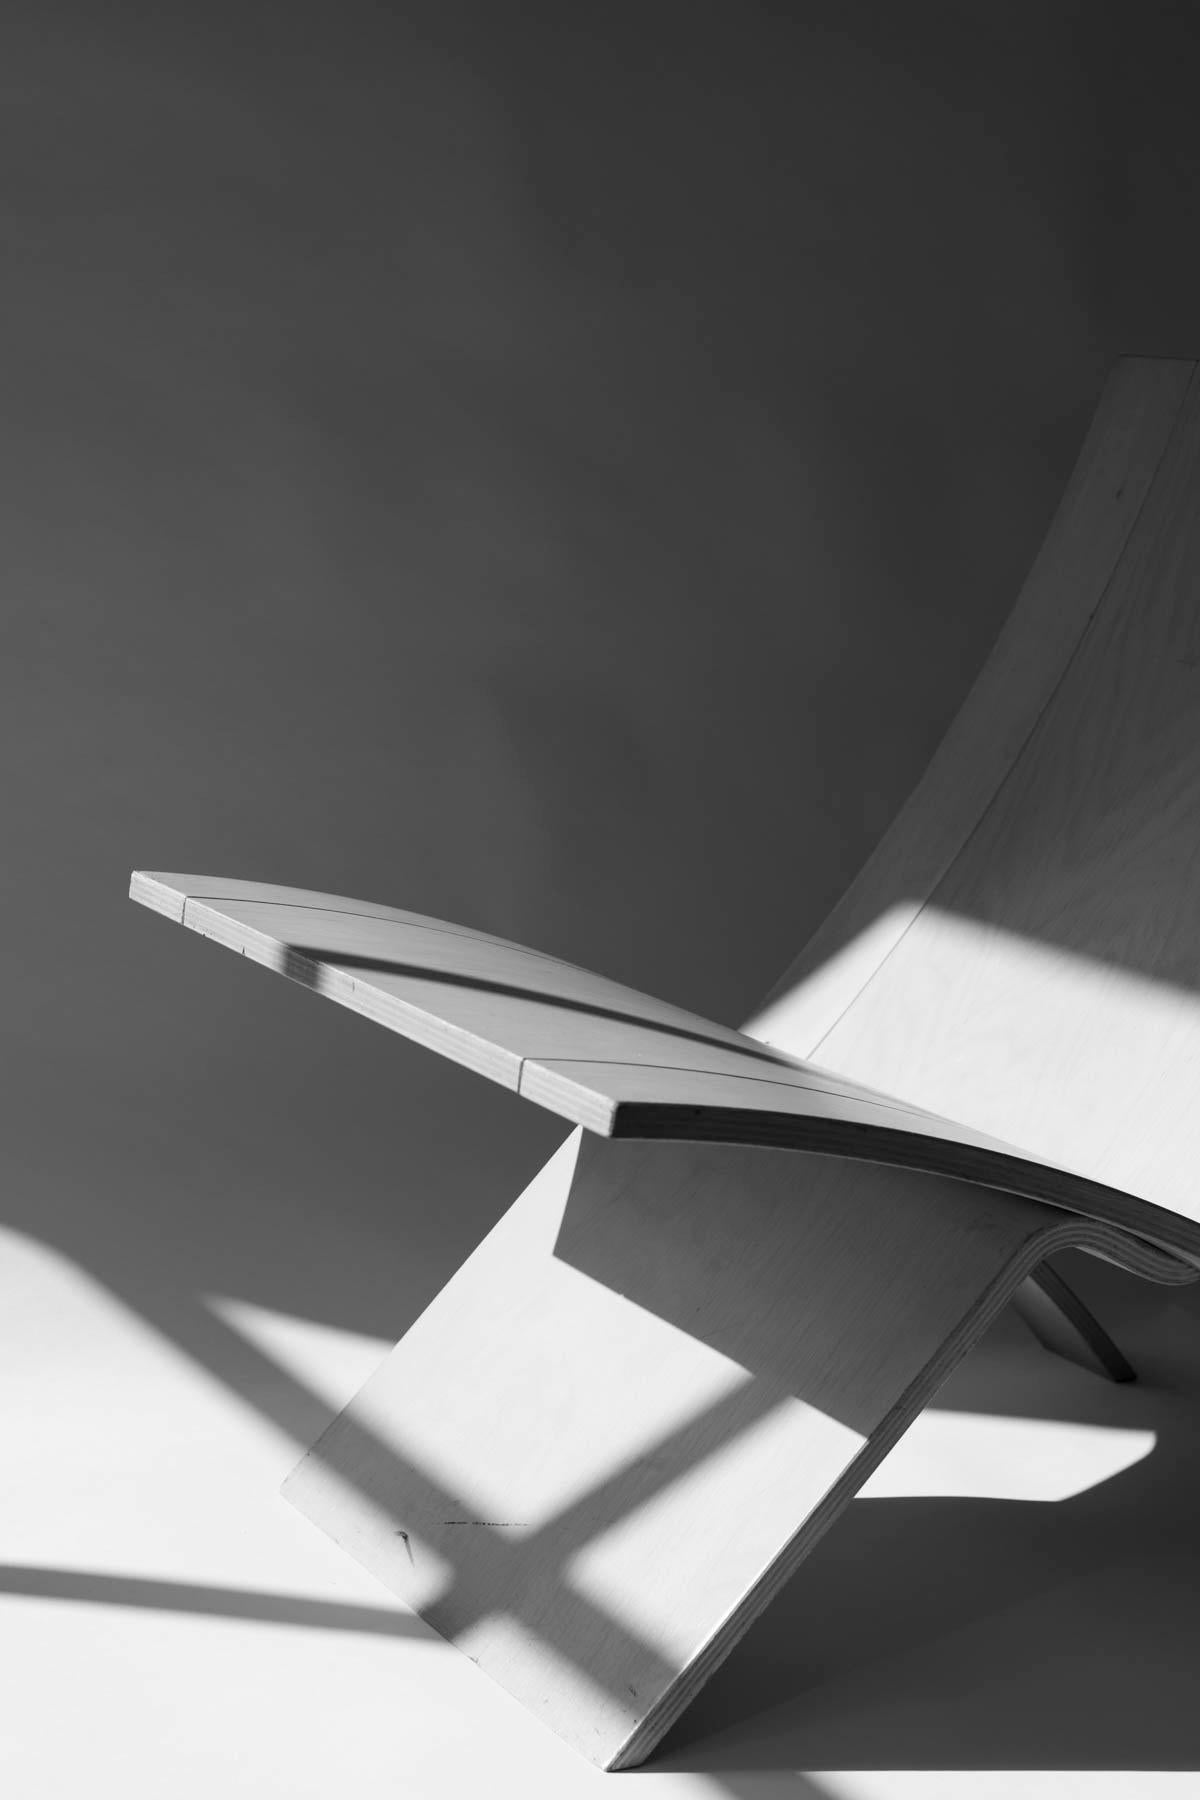 Beechwood 'Laminex' Folding Chair by Jens Nielsen 80s for Falster For Sale 7